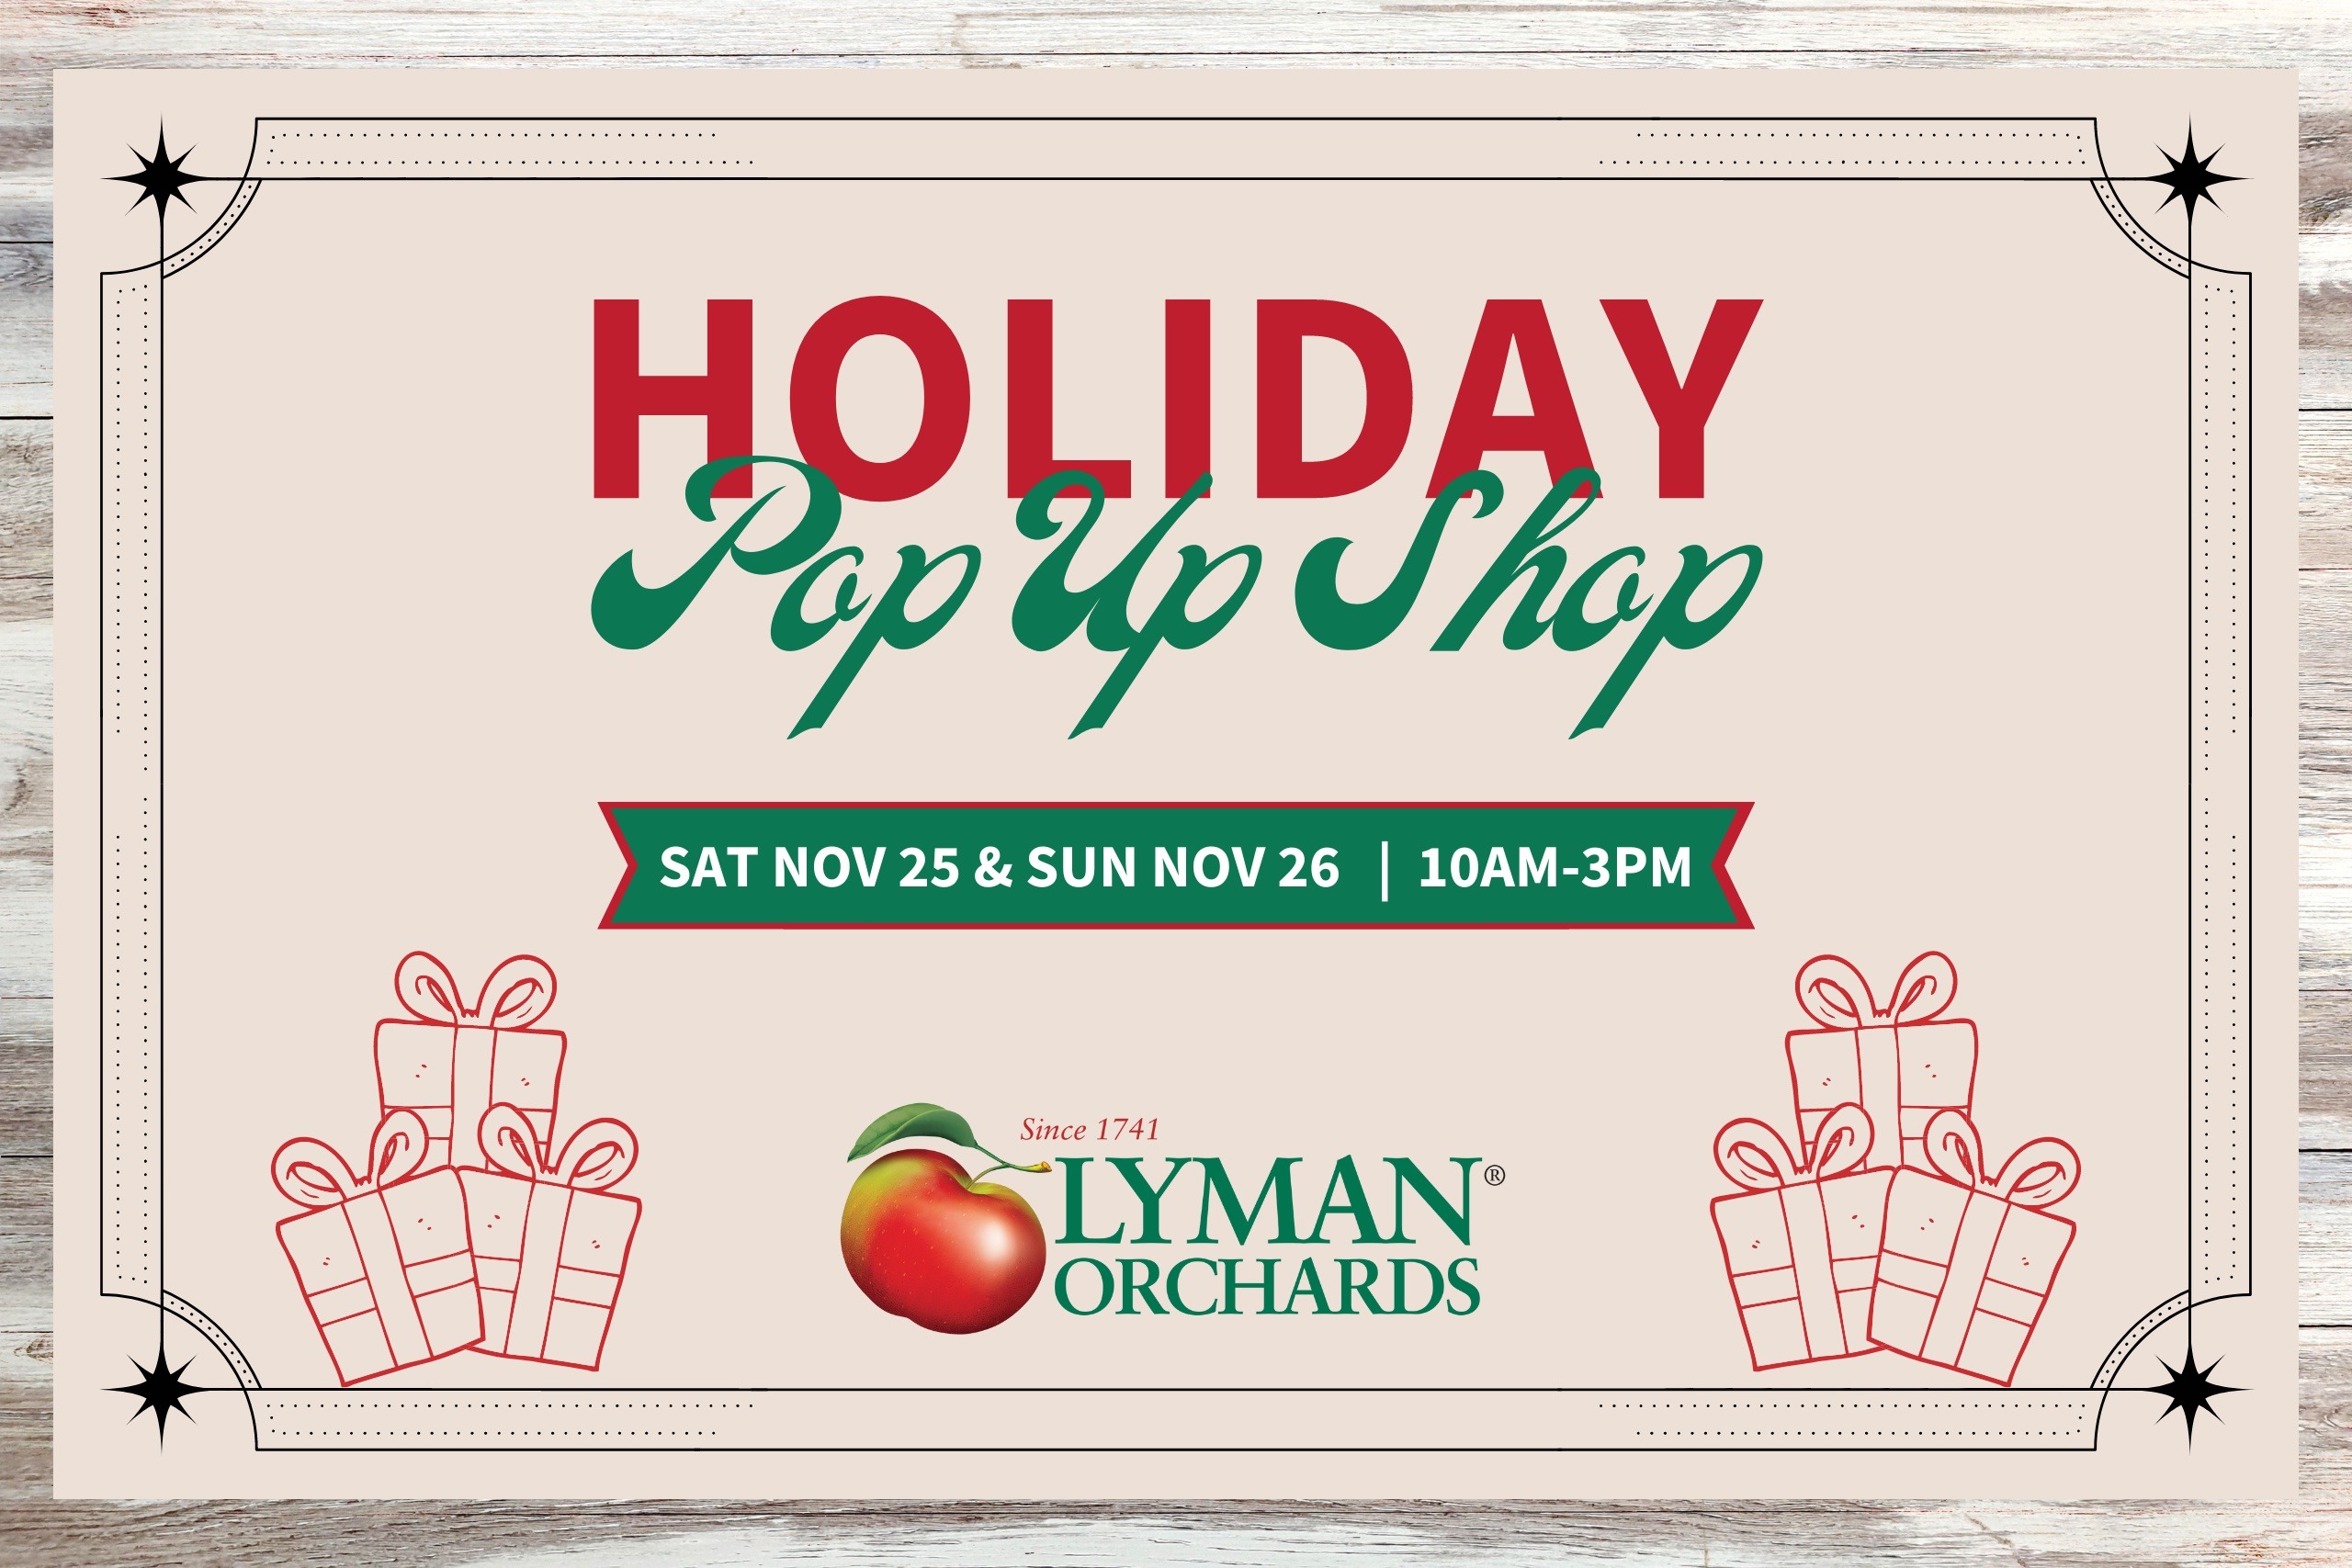 Holiday Pop-Up Shop at Lyman Orchards